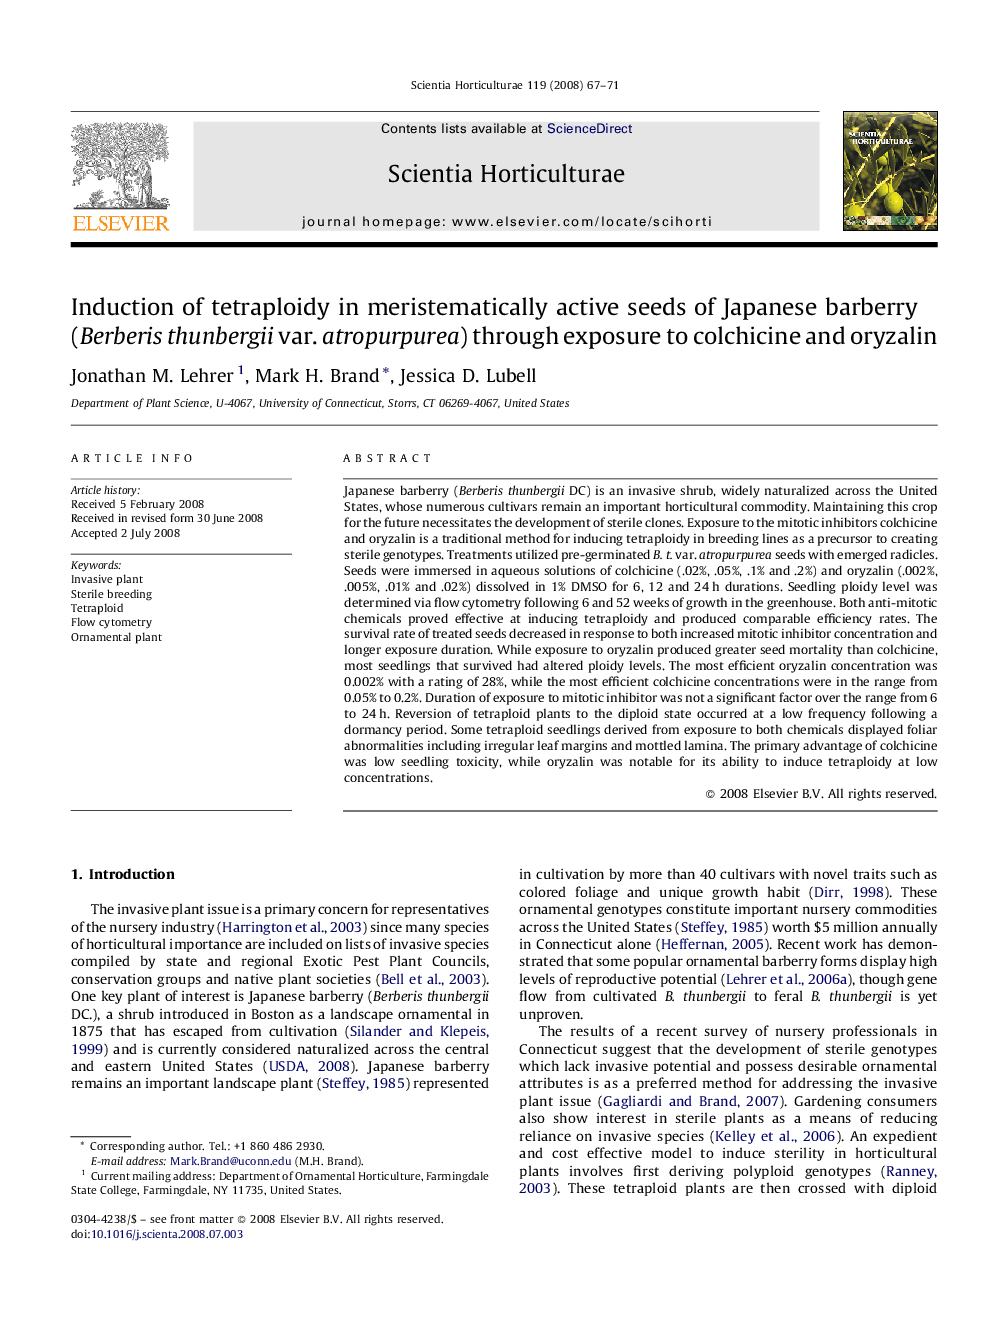 Induction of tetraploidy in meristematically active seeds of Japanese barberry (Berberis thunbergii var. atropurpurea) through exposure to colchicine and oryzalin